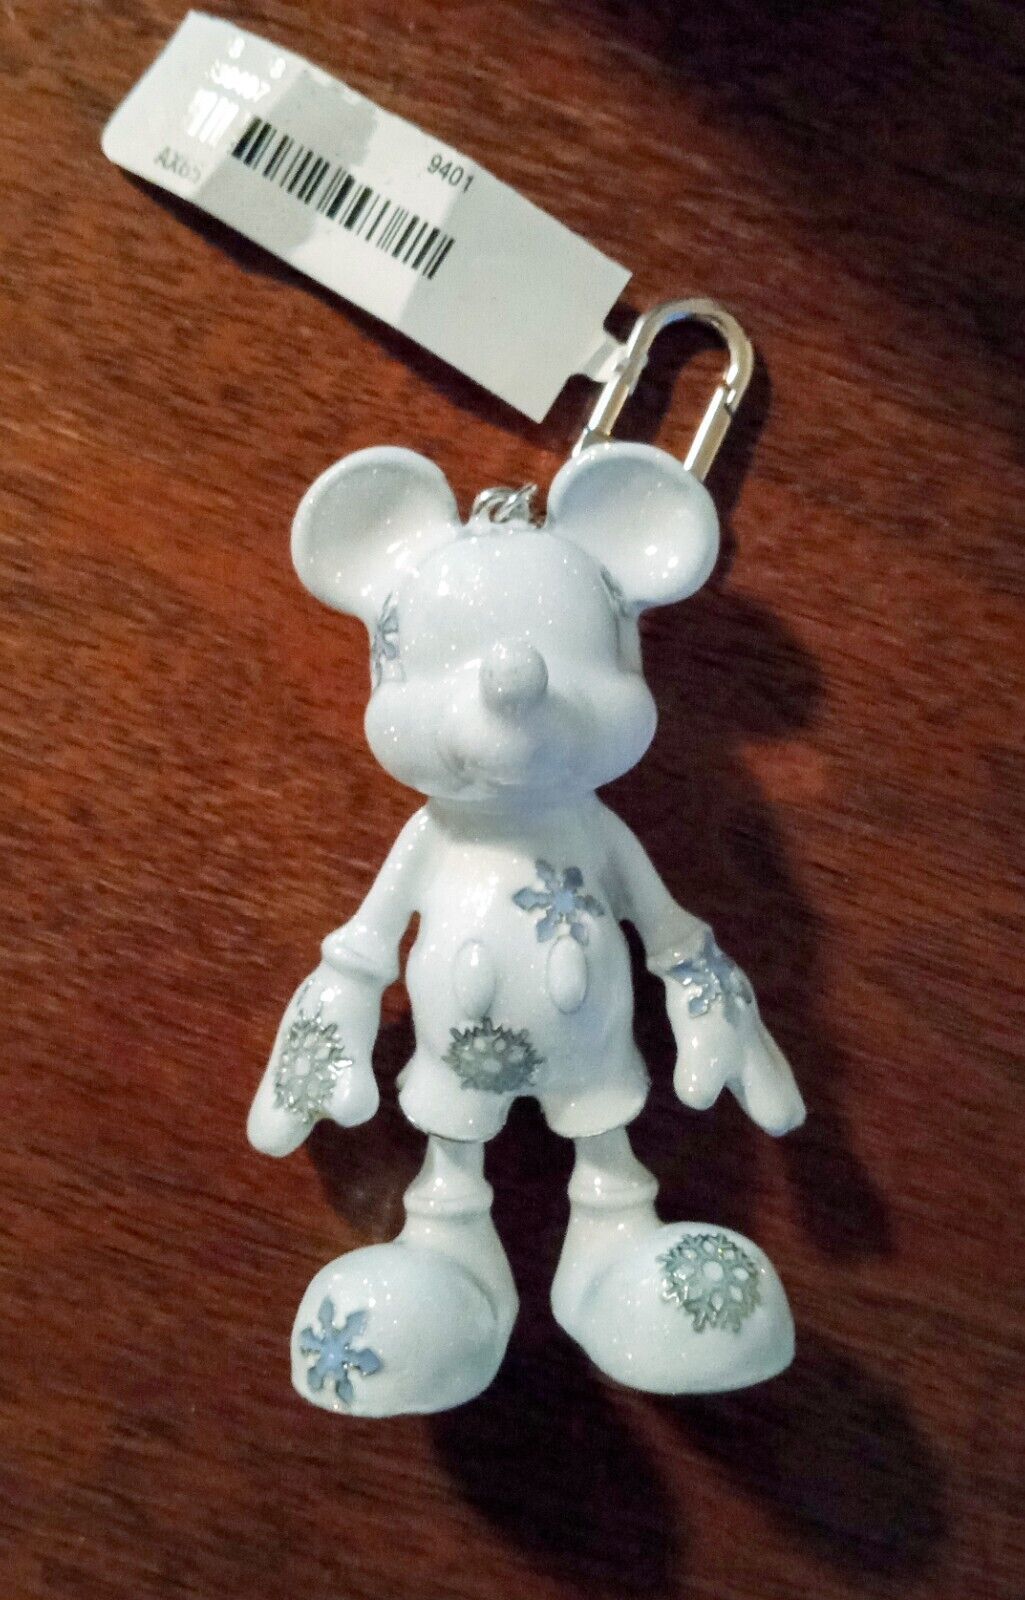 BNIB Disney Baublebar Limited Edition Winter Snowflake Mickey Mouse Charm- RARE